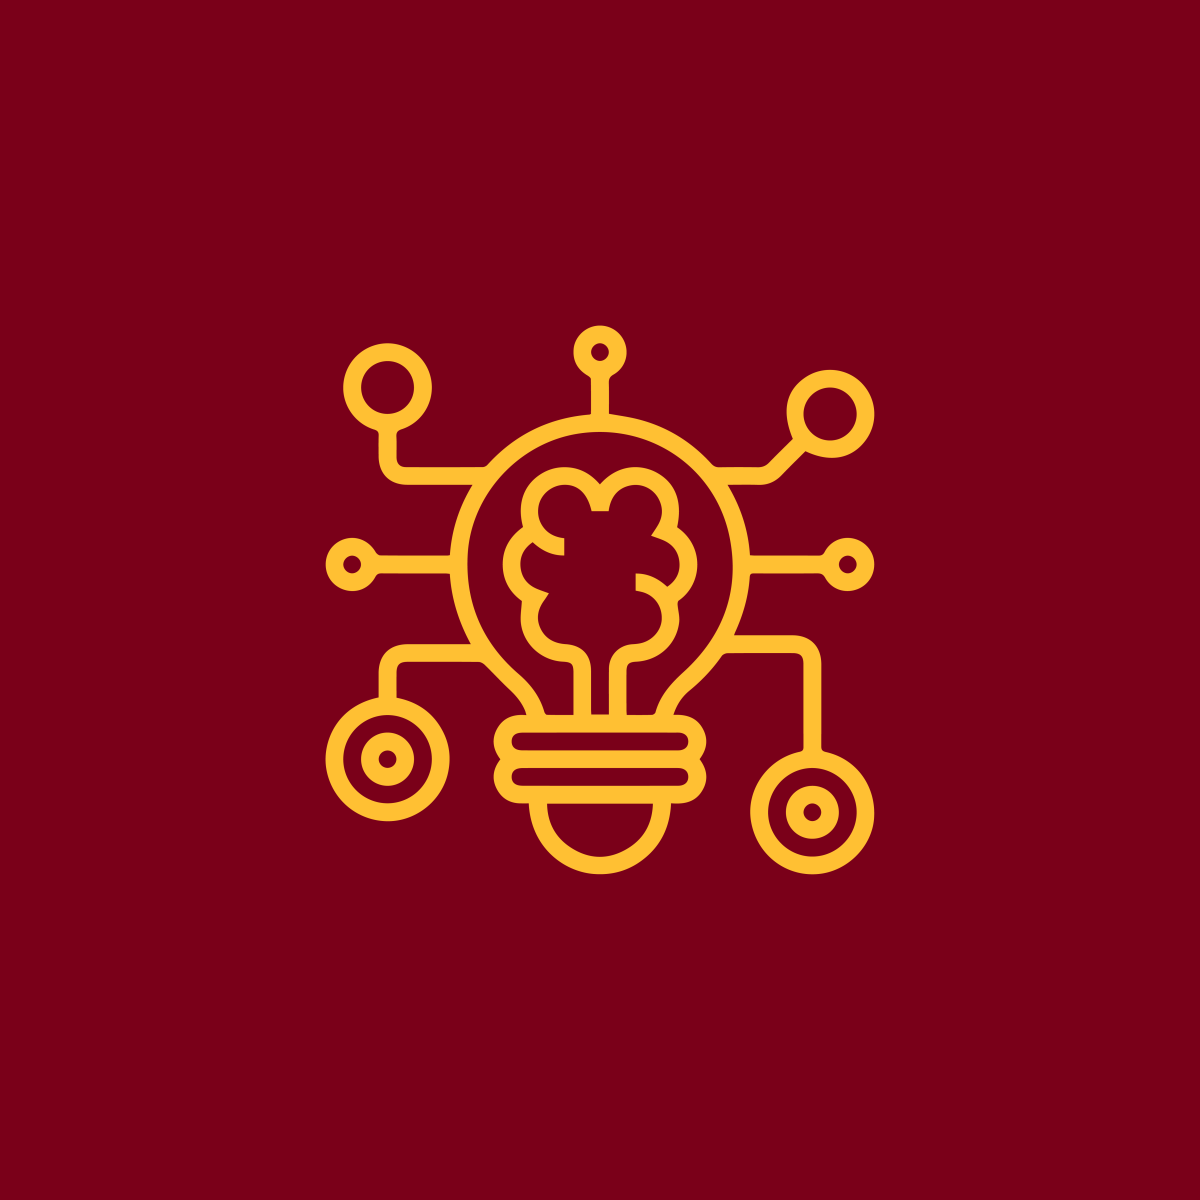 lightbulb with brain icon